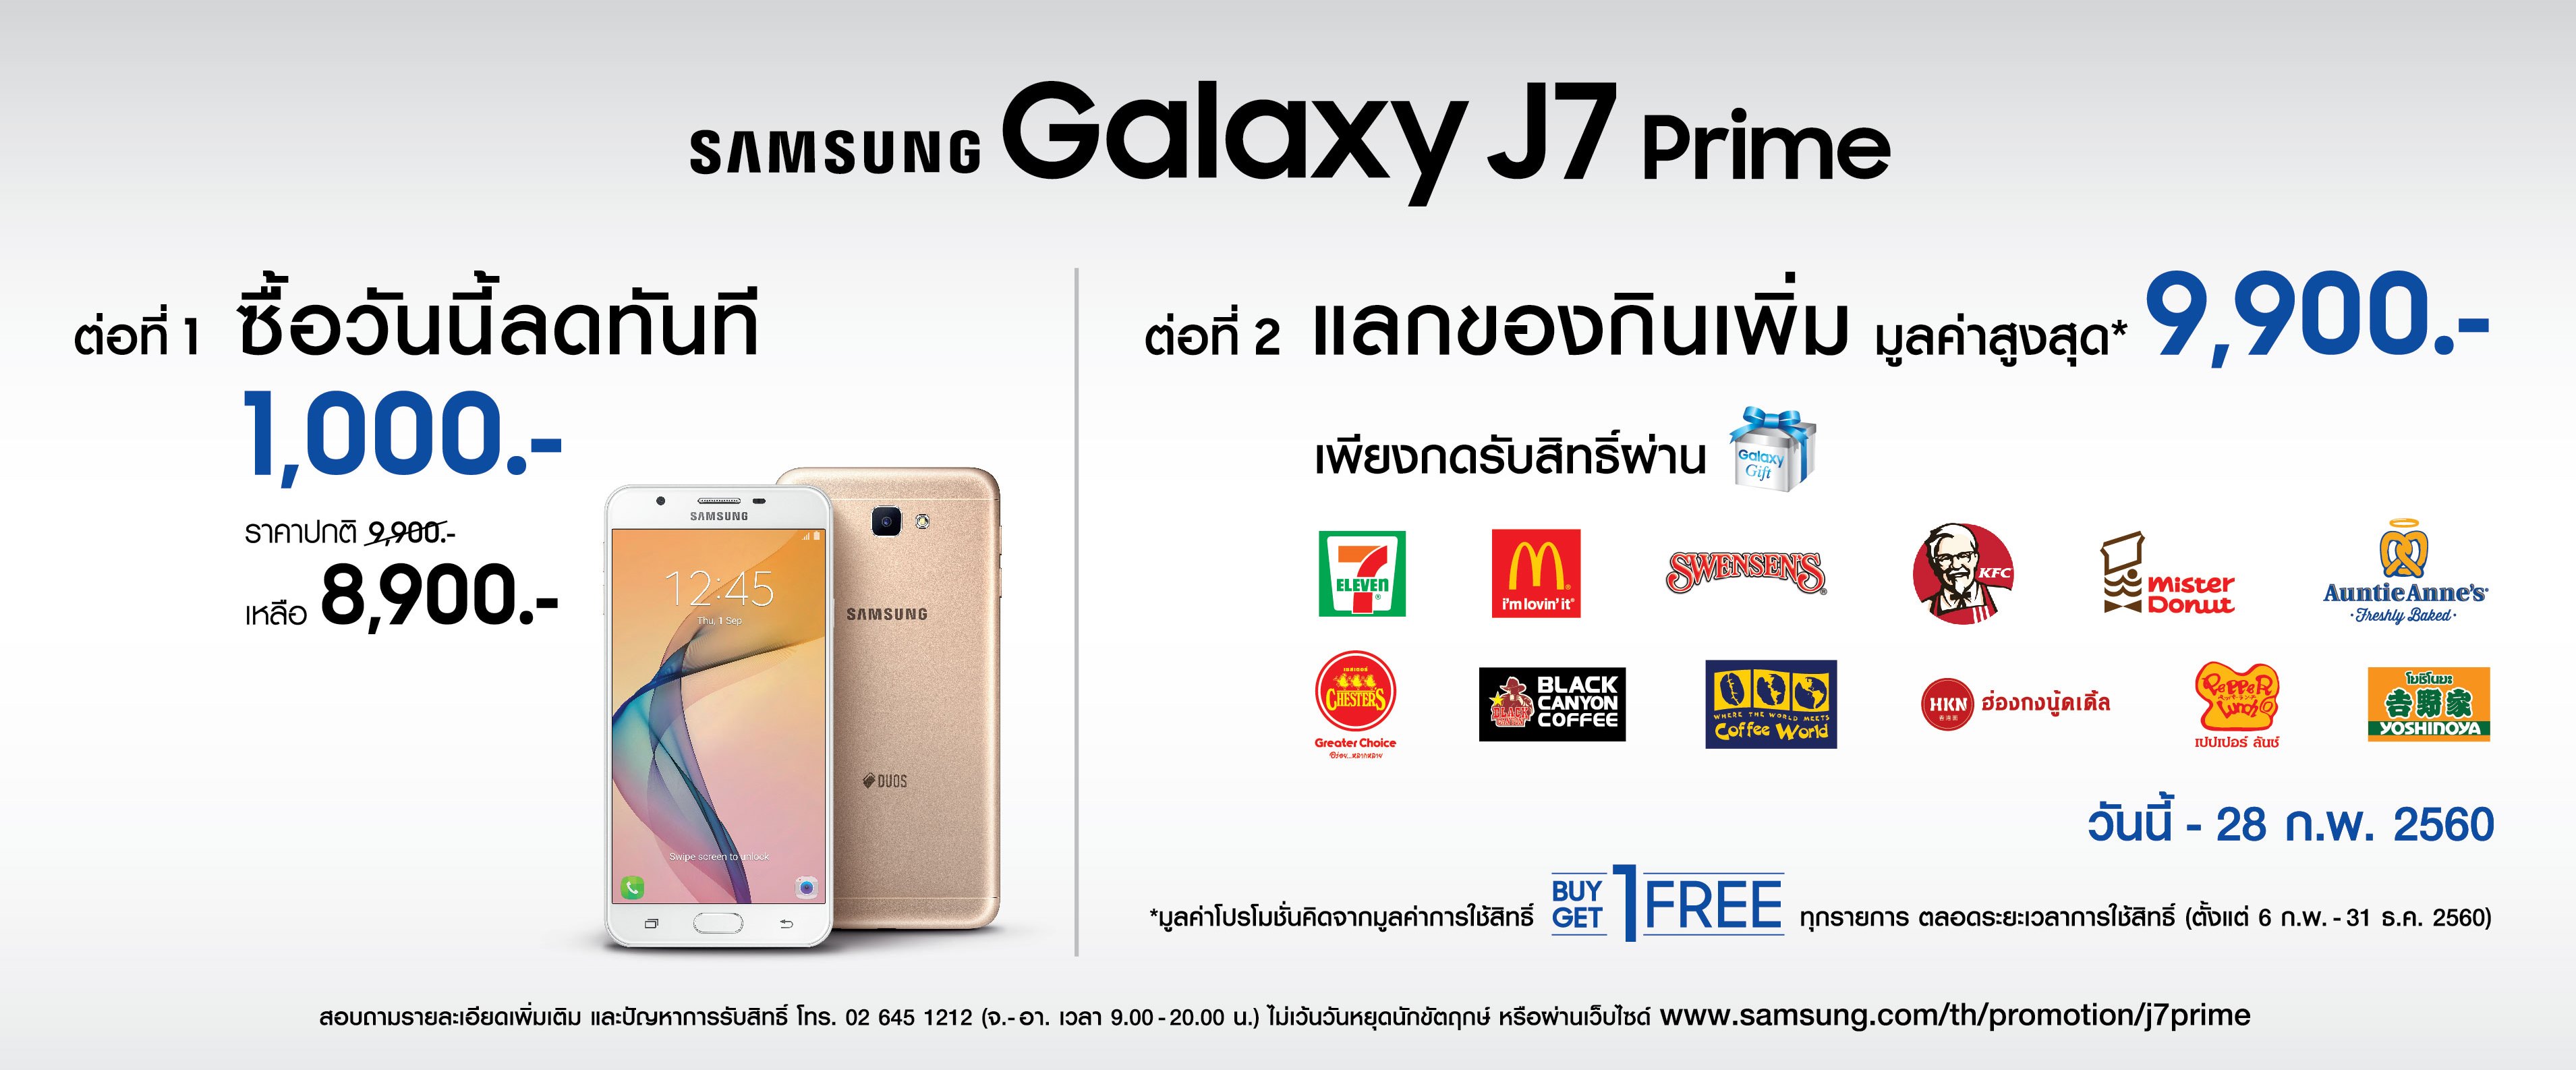 Galaxy J7 Prime x Galaxy Gift Promotion